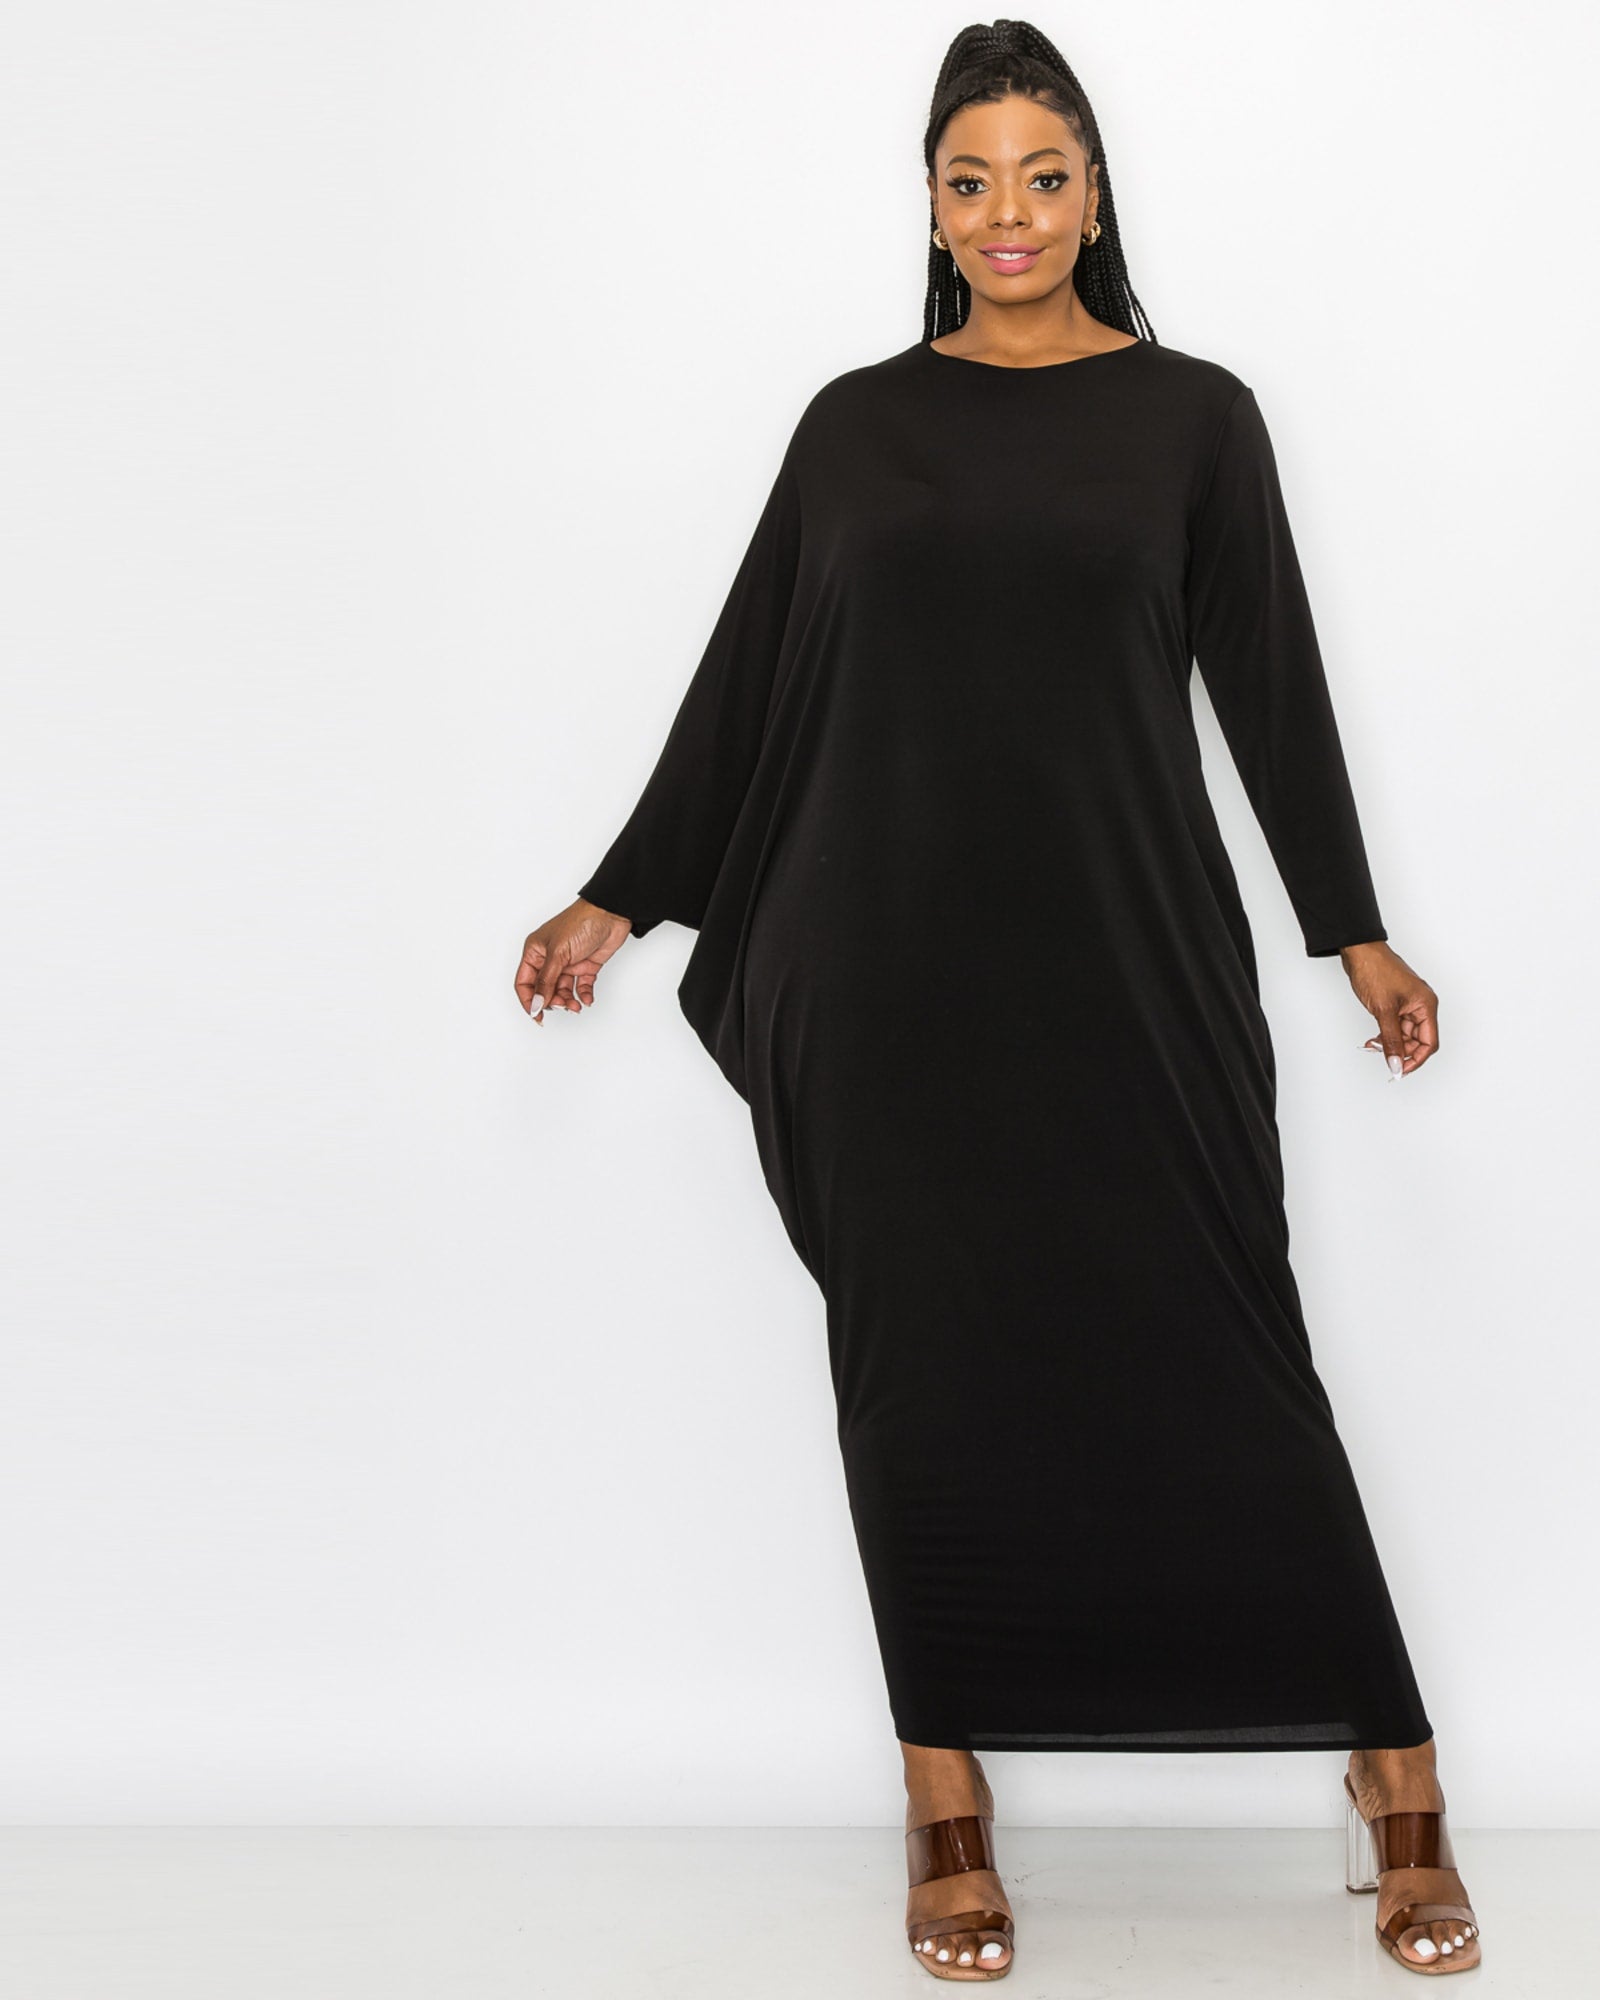 Plus Size Black Long Sleeve Maxi Dress